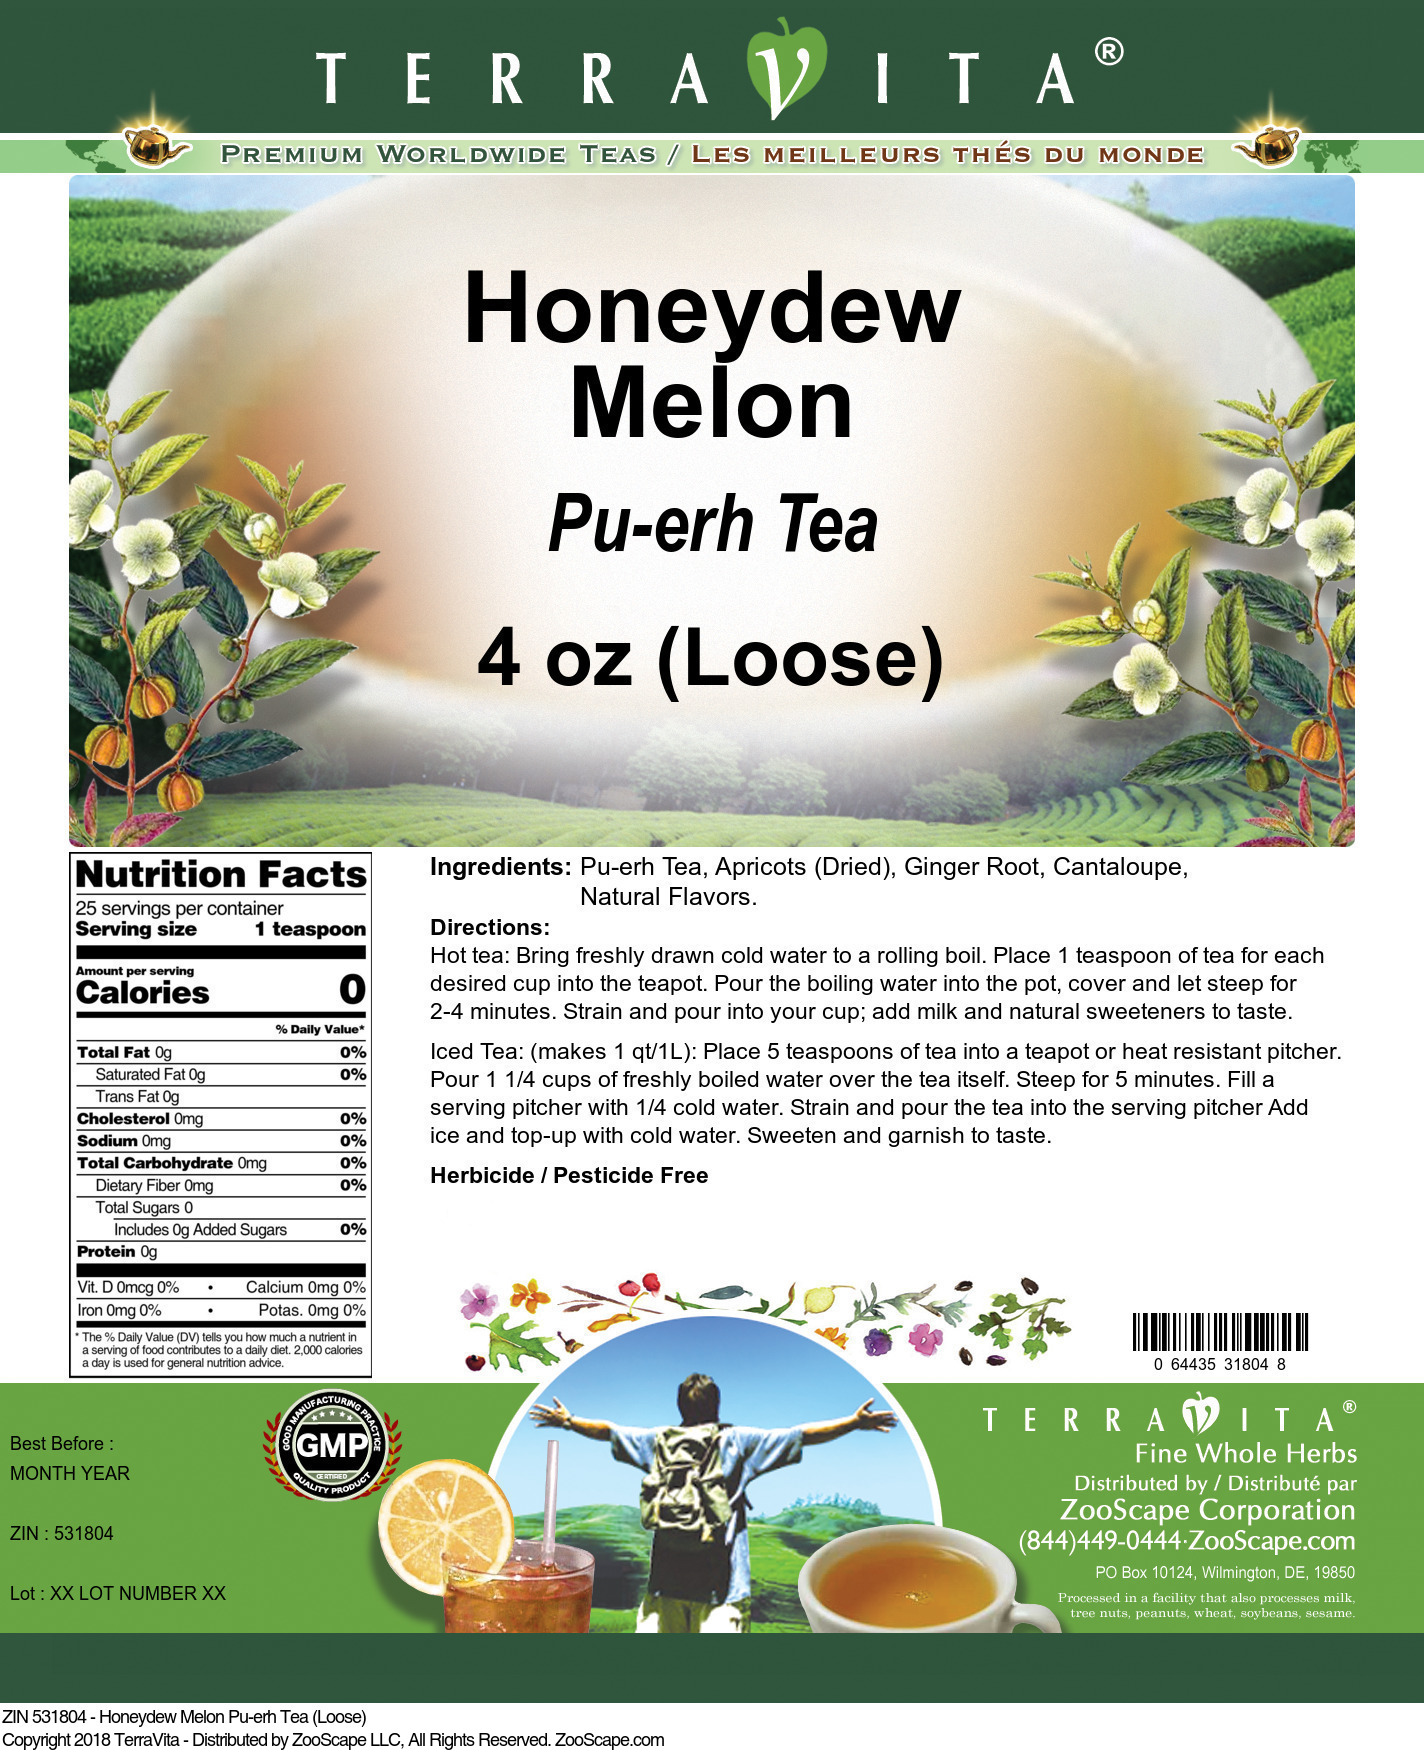 Honeydew Melon Pu-erh Tea (Loose) - Label